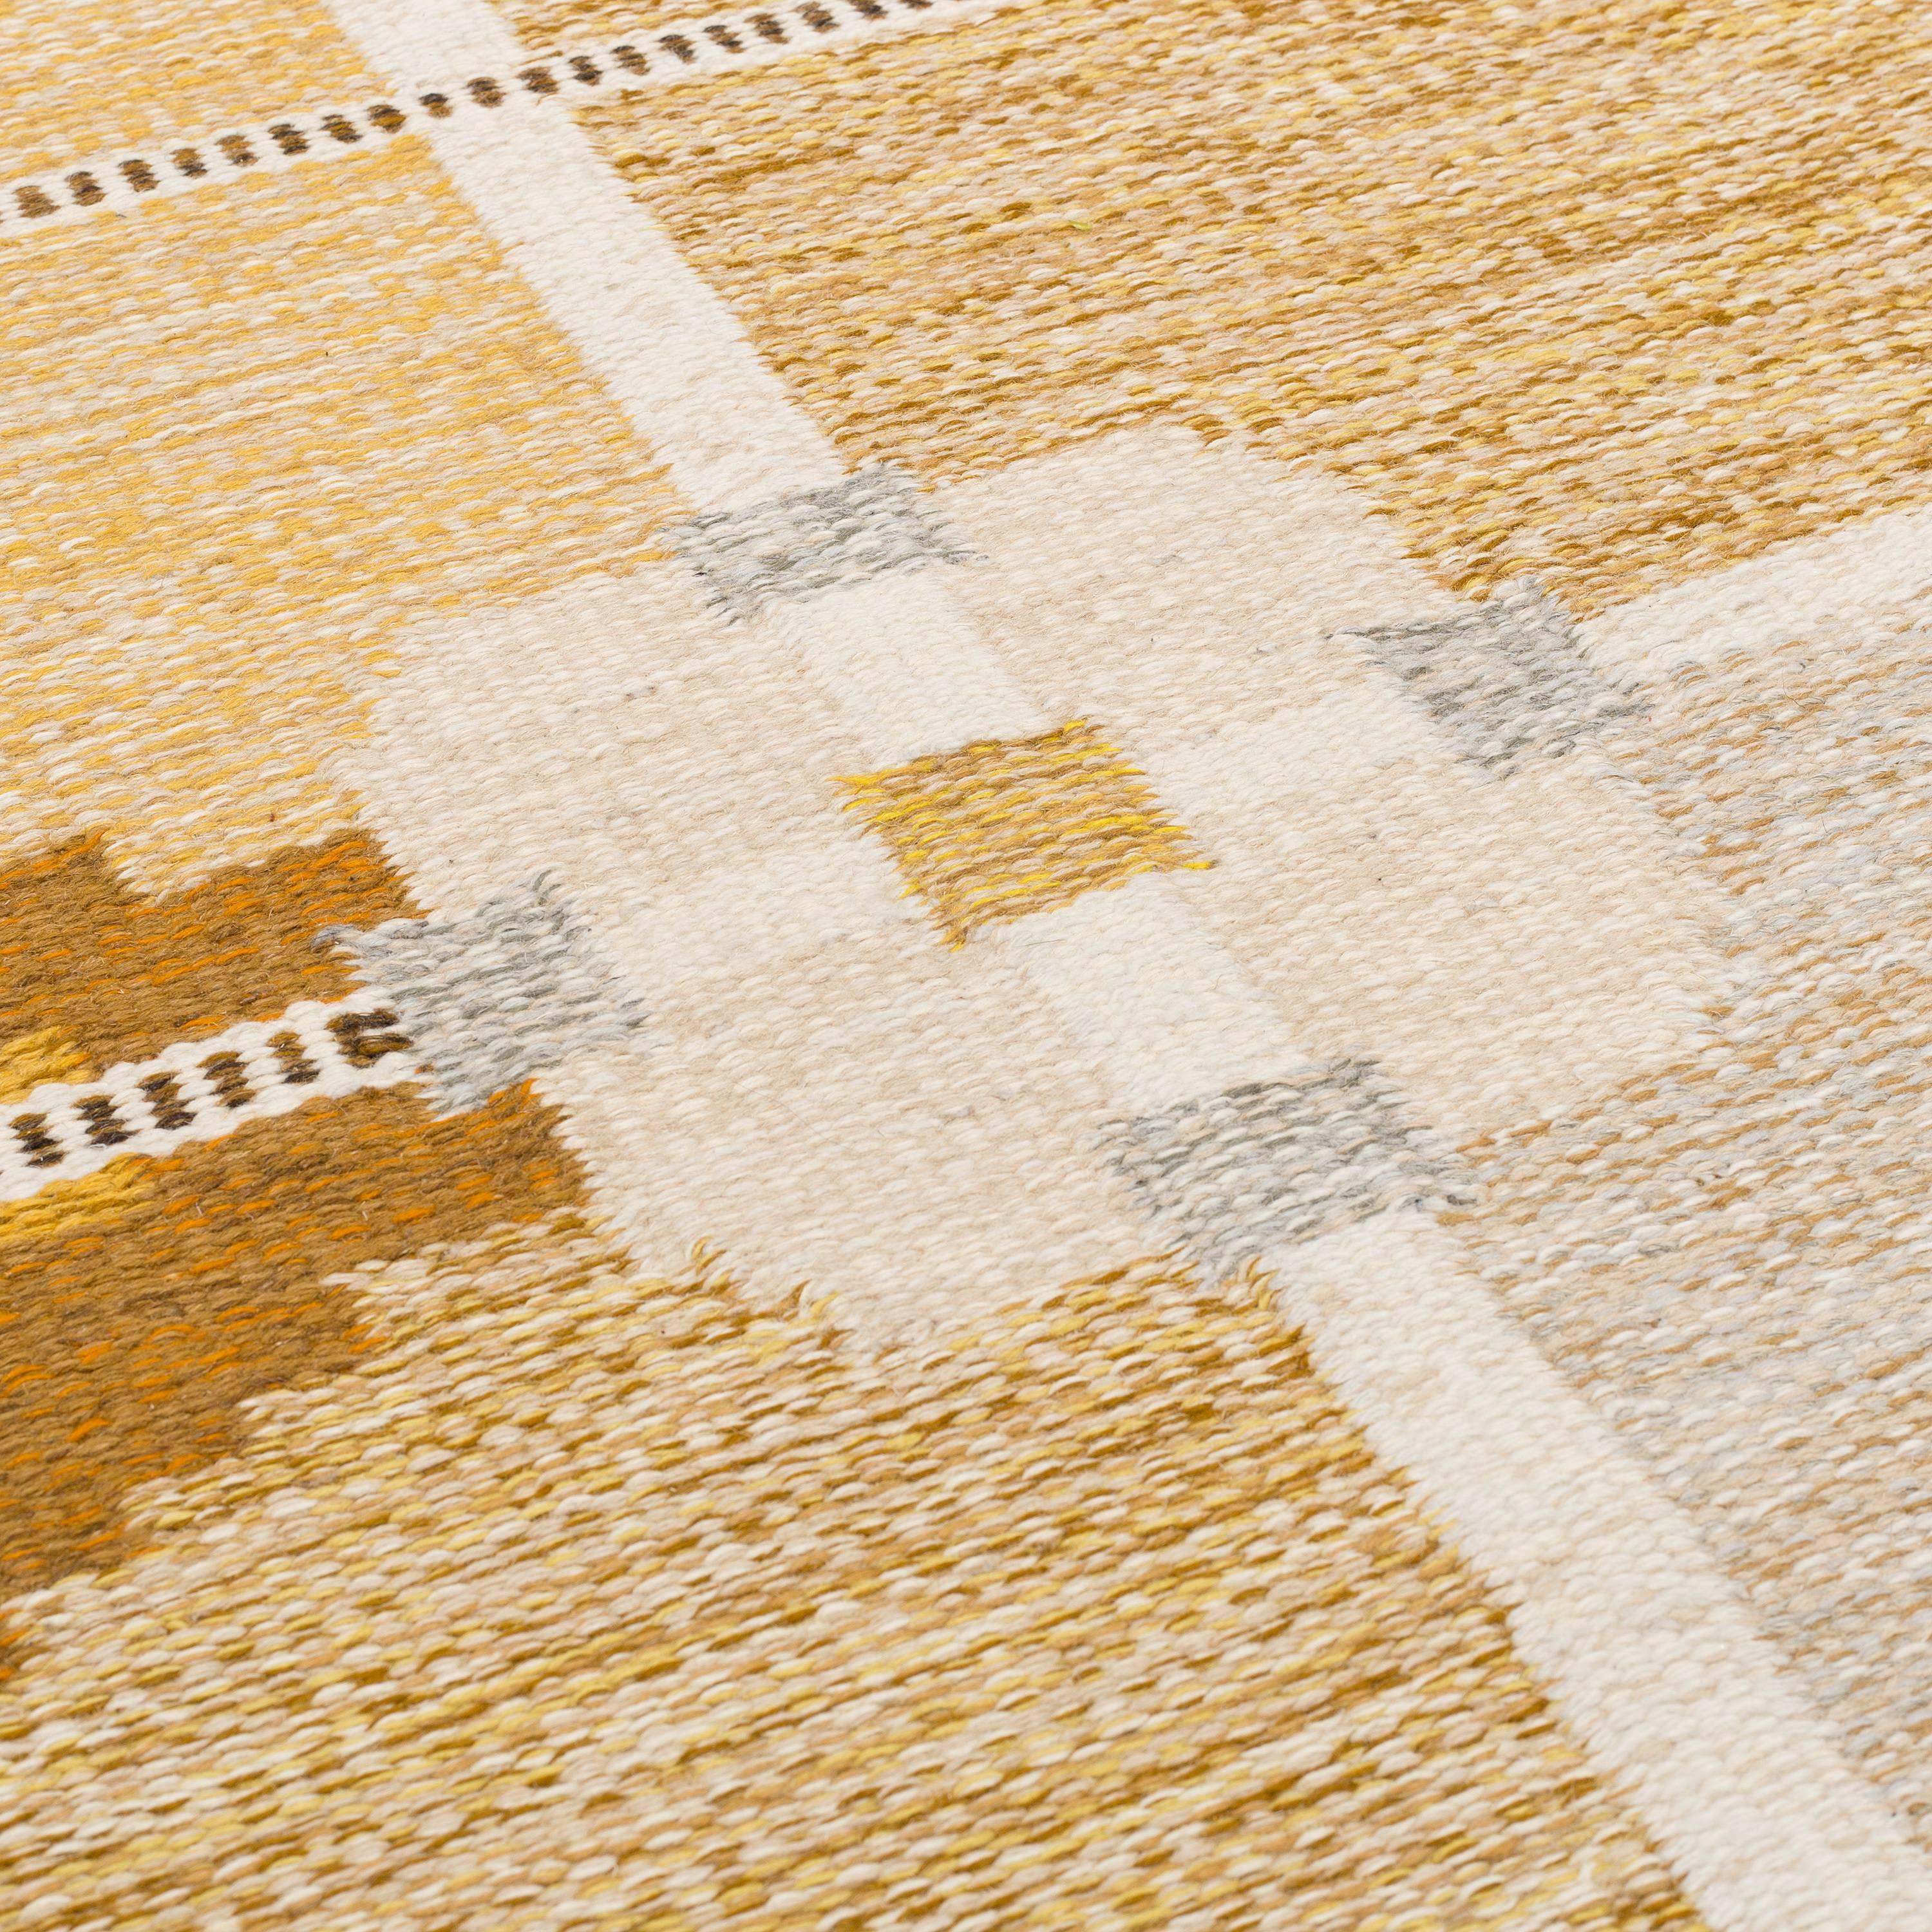 Swedish Rolakan flat-weave rug, Ingegerd Silow

Measure: 229 x 168cm.